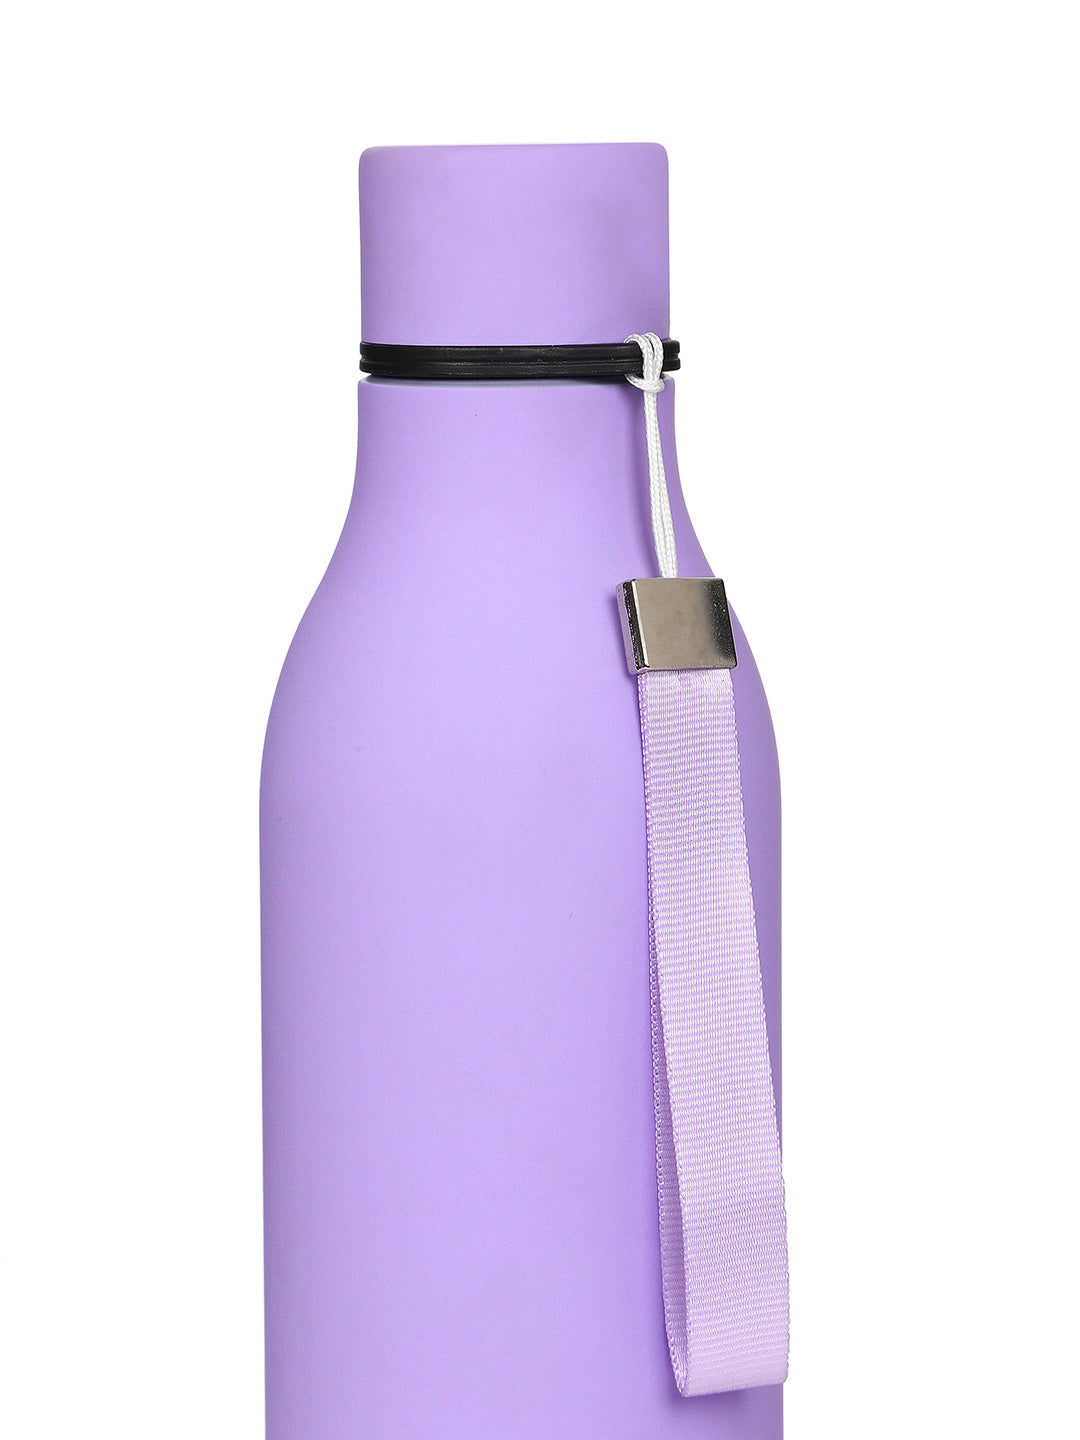 Don't Be Basic - Lavender Stainless Steel Bottle BODD ACTIVE